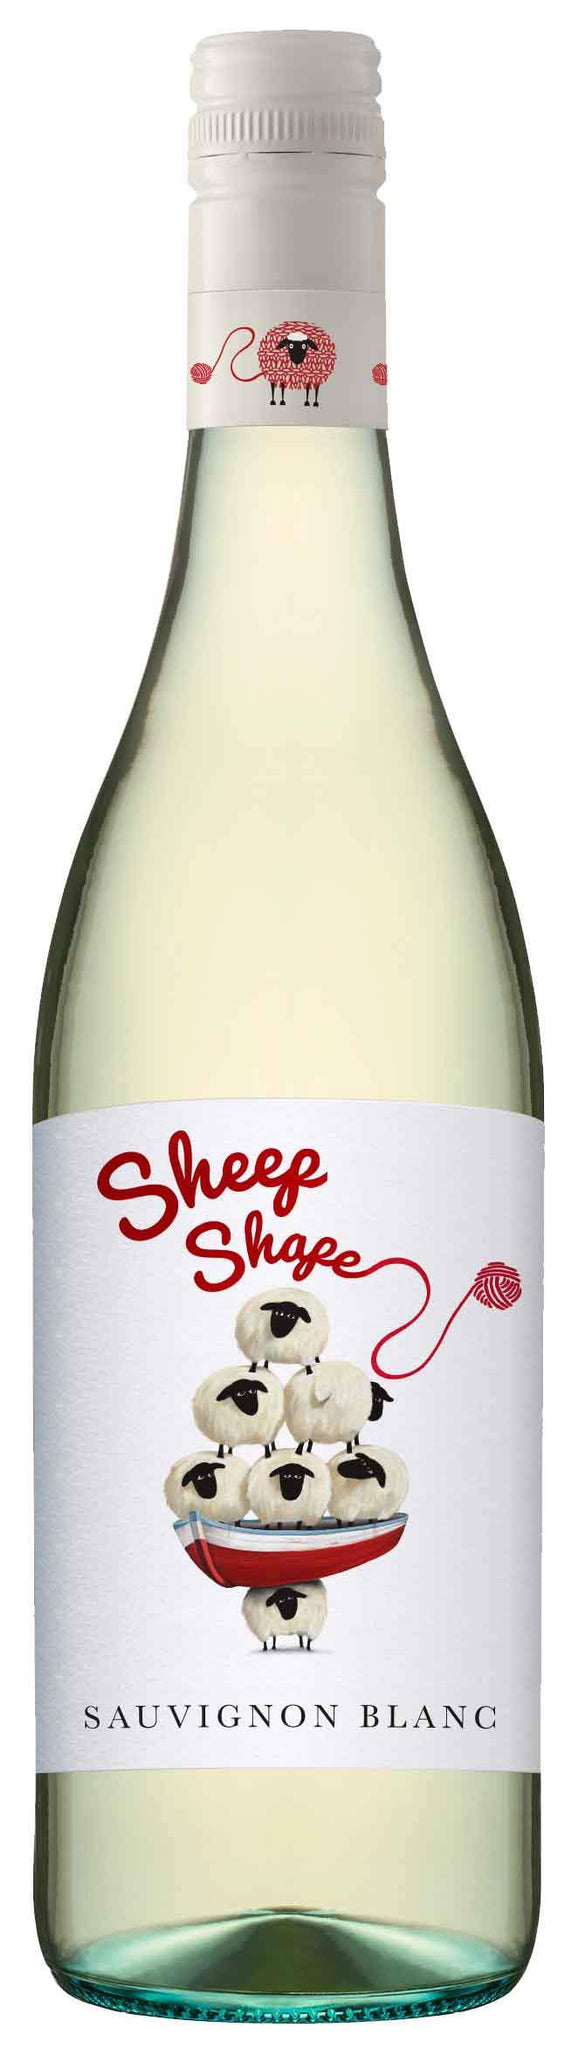 Sheep Shape Sauvignon Blanc 750ml